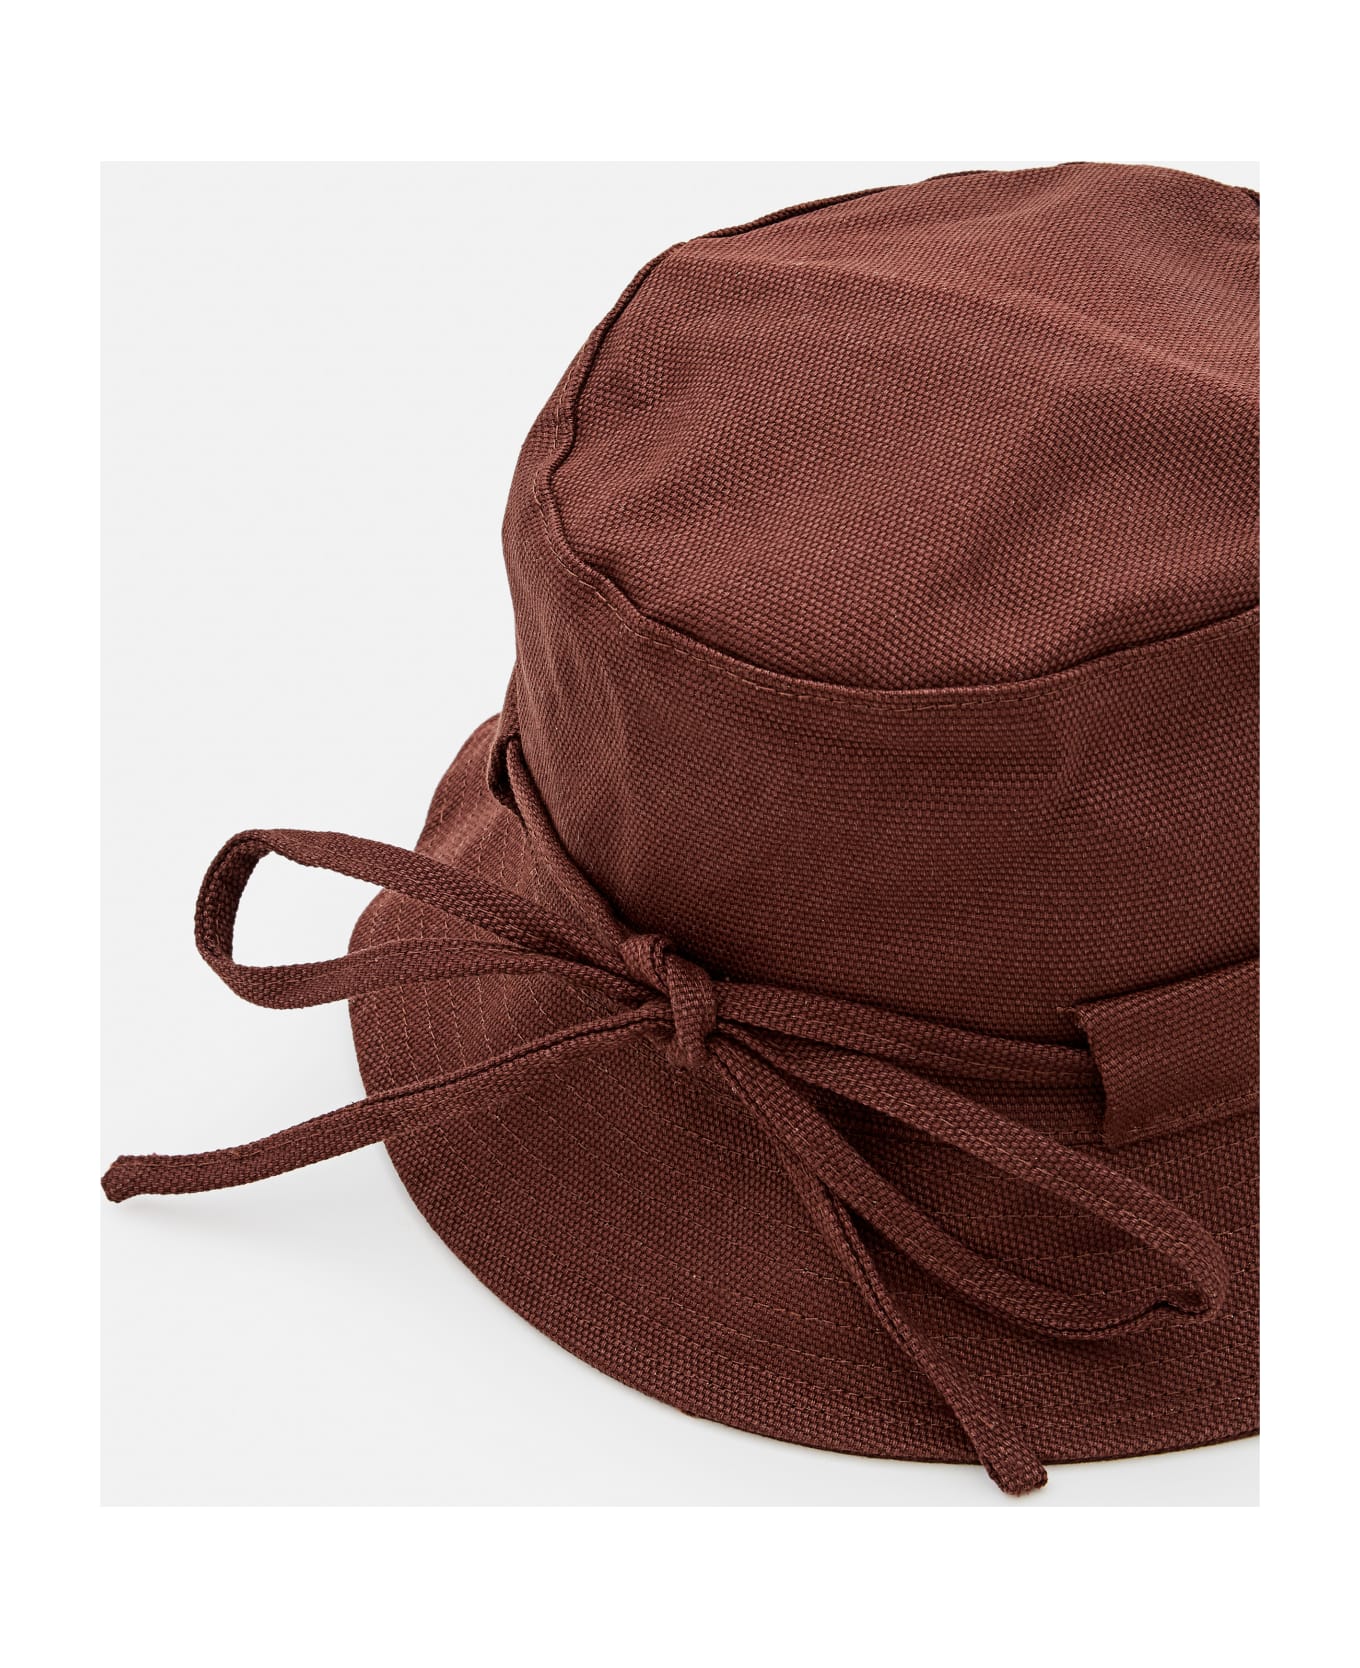 Jacquemus 'gadjo' Bucket Hat - Brown 帽子